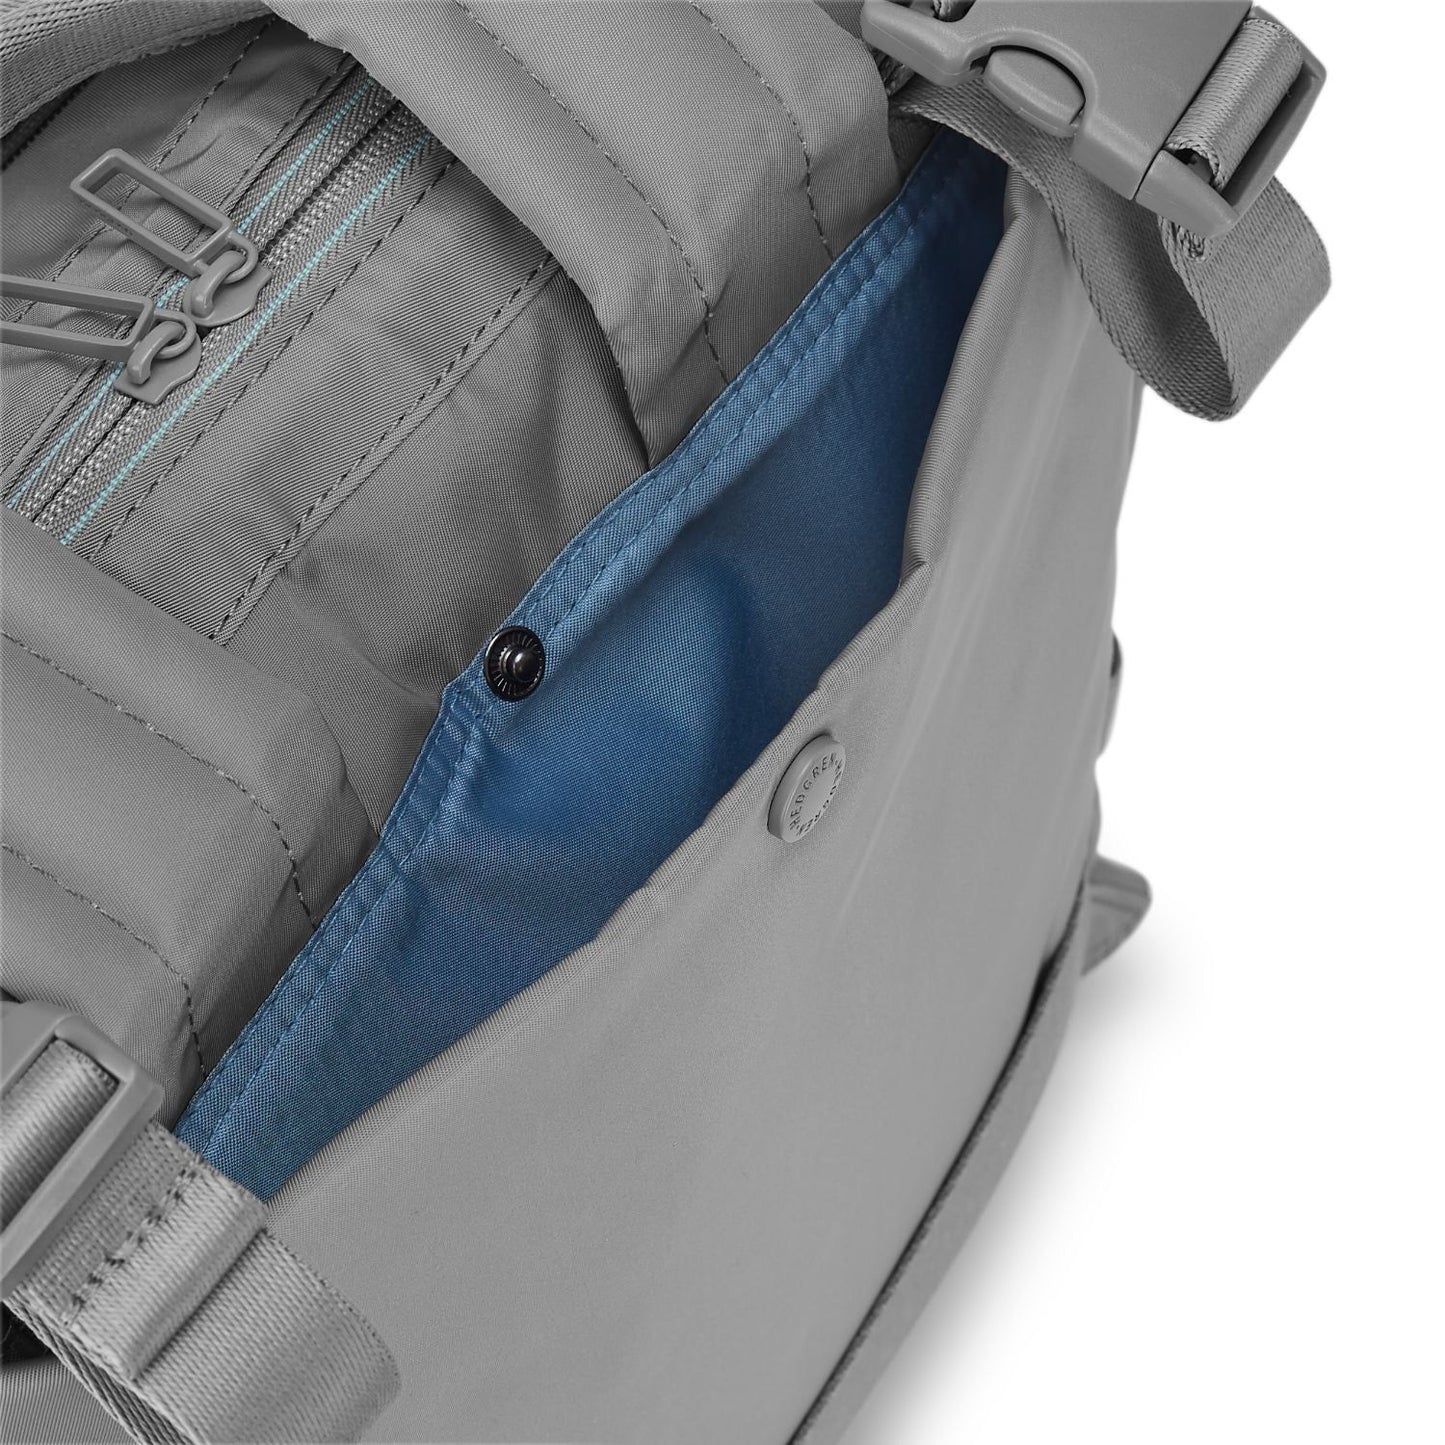 Hedgren - CHERUB Baby Backpack with Changing Mat - rainbowbags